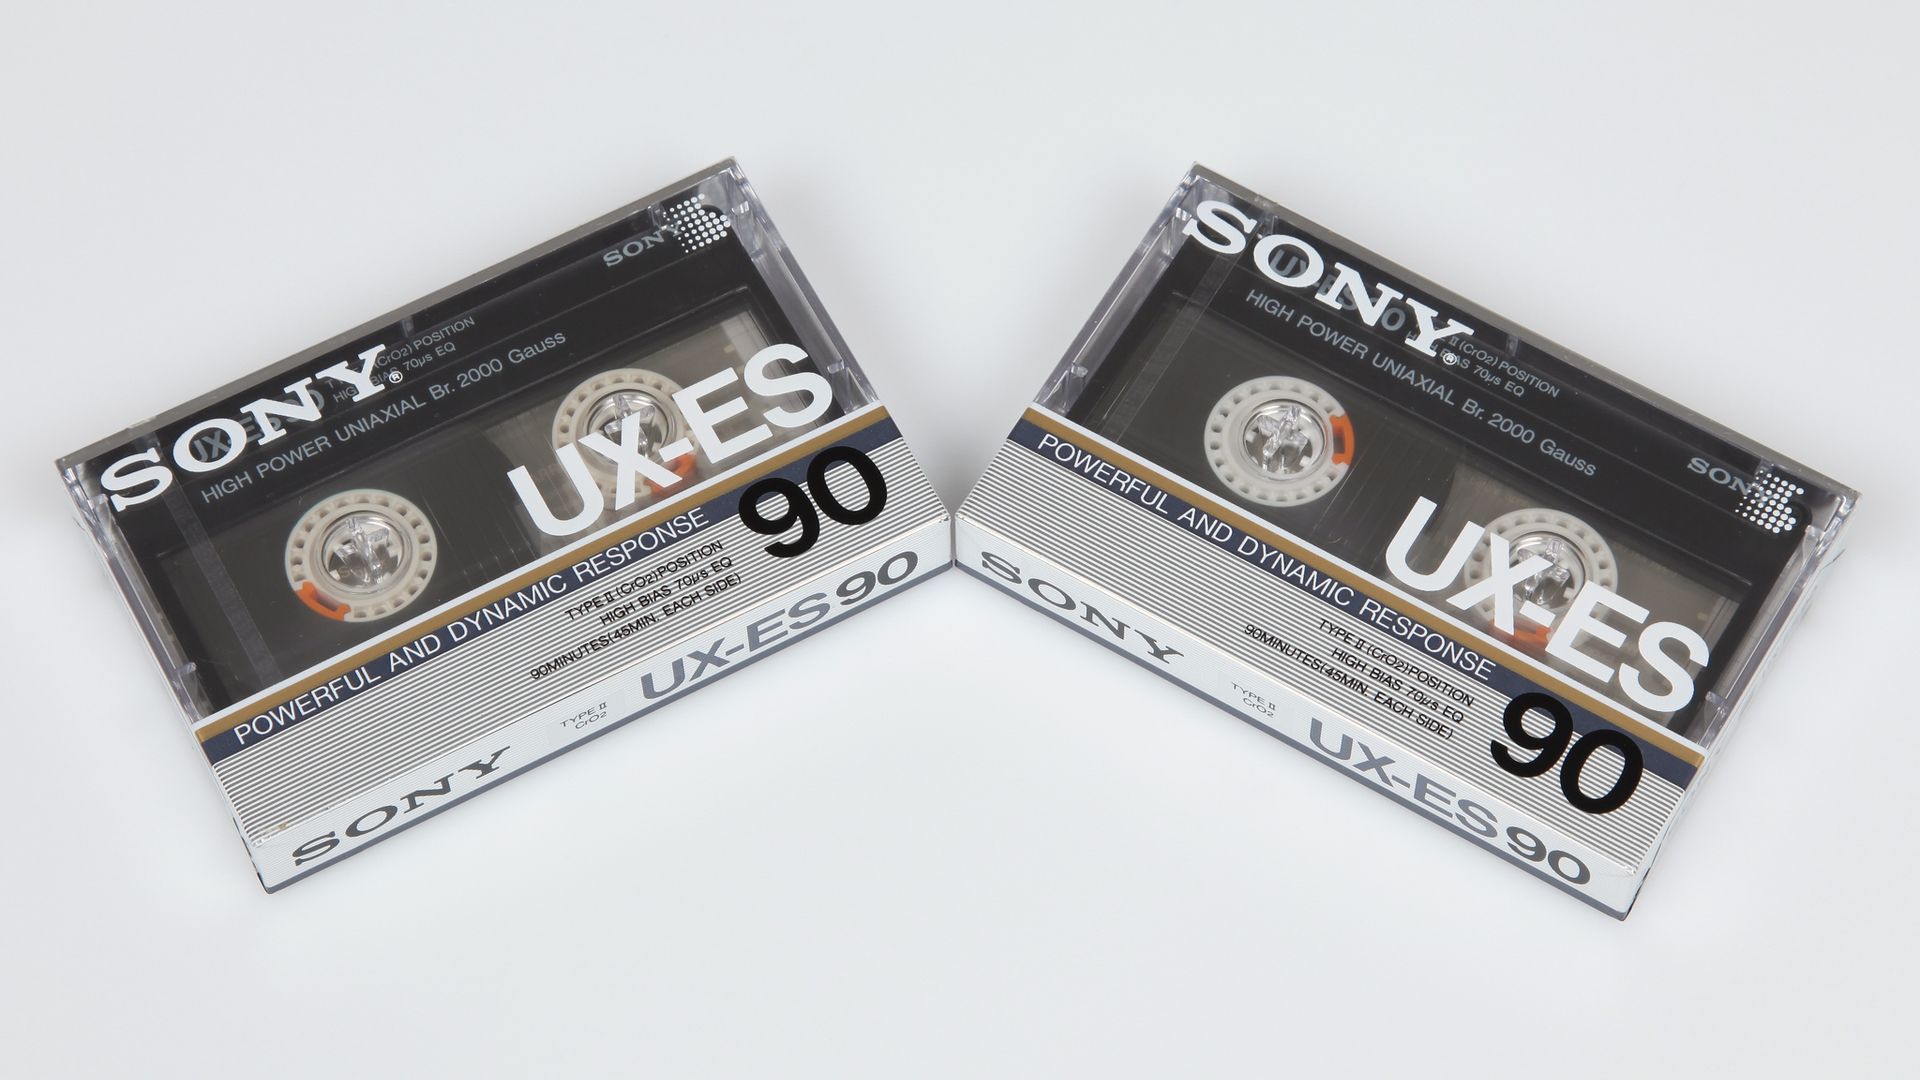 Cassette Audio Sony - Retro fond.jpg